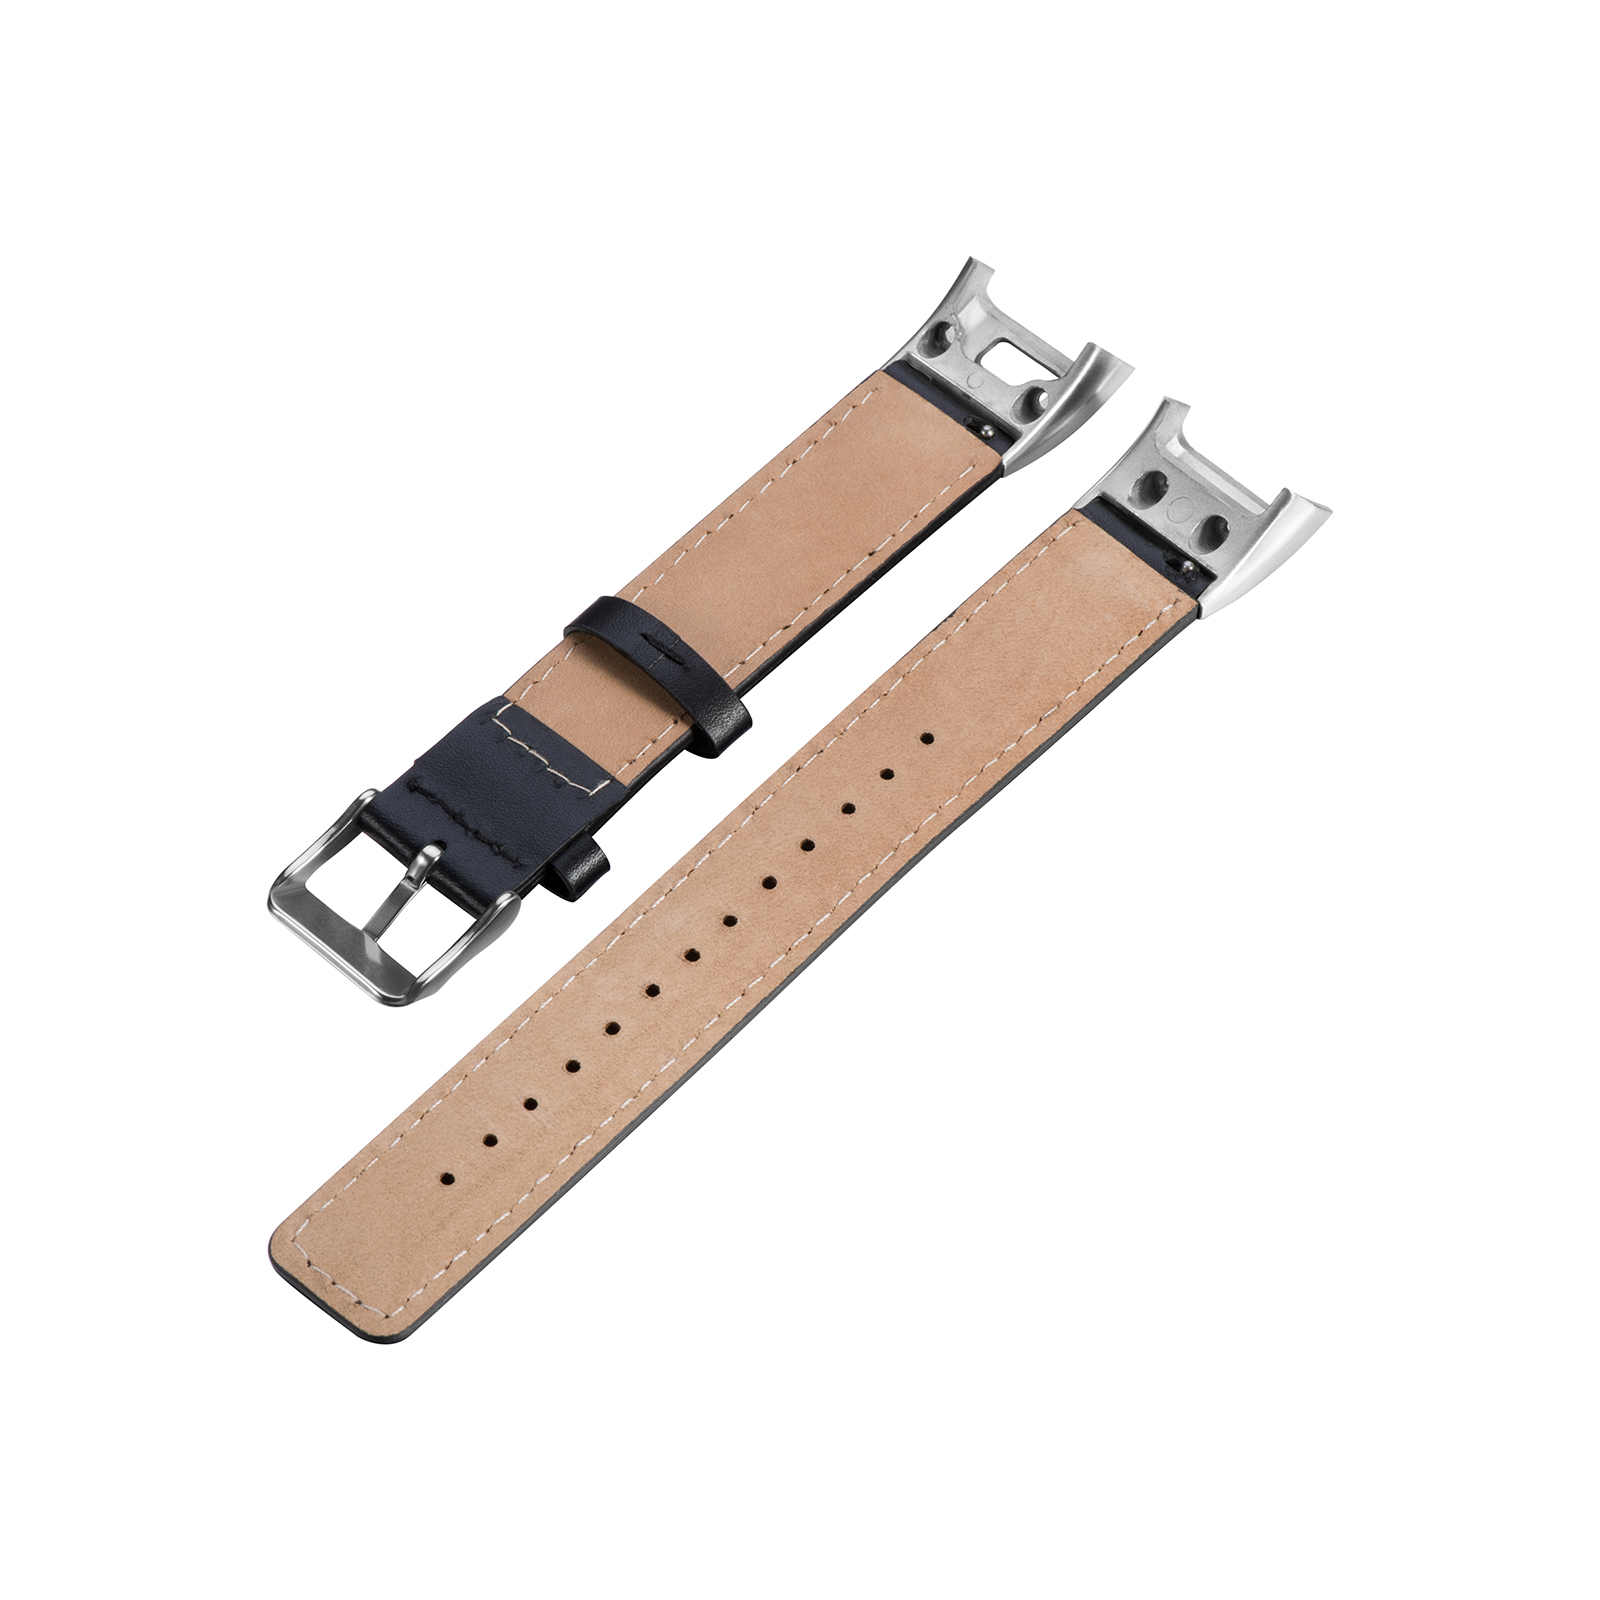 Bakeey-Retro-Metal-Buckle-Leather-Strap-Smart-Watch-Band-For-Garmin-Vivosmart-HR-1739351-10